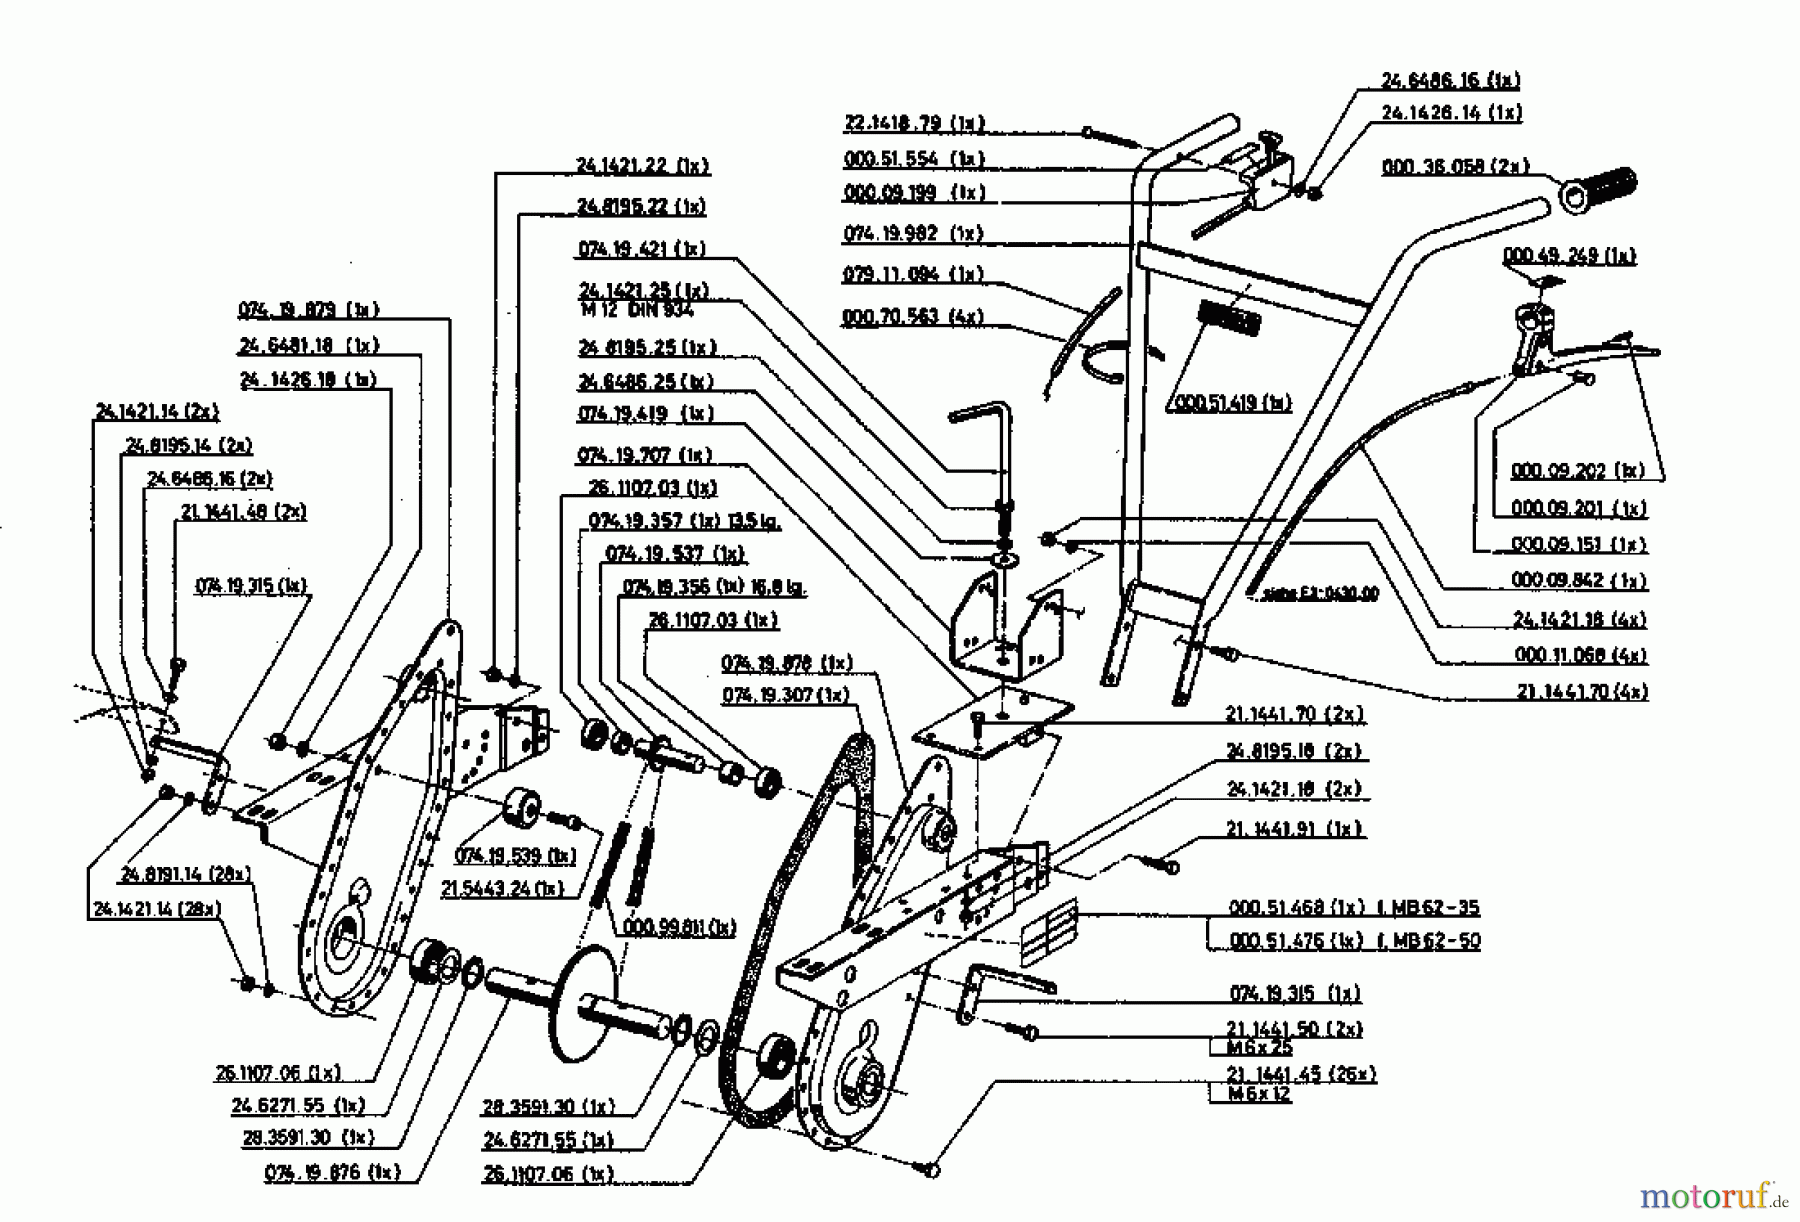  Gutbrod Tillers MB 62-35 07518.01  (1994) Basic machine